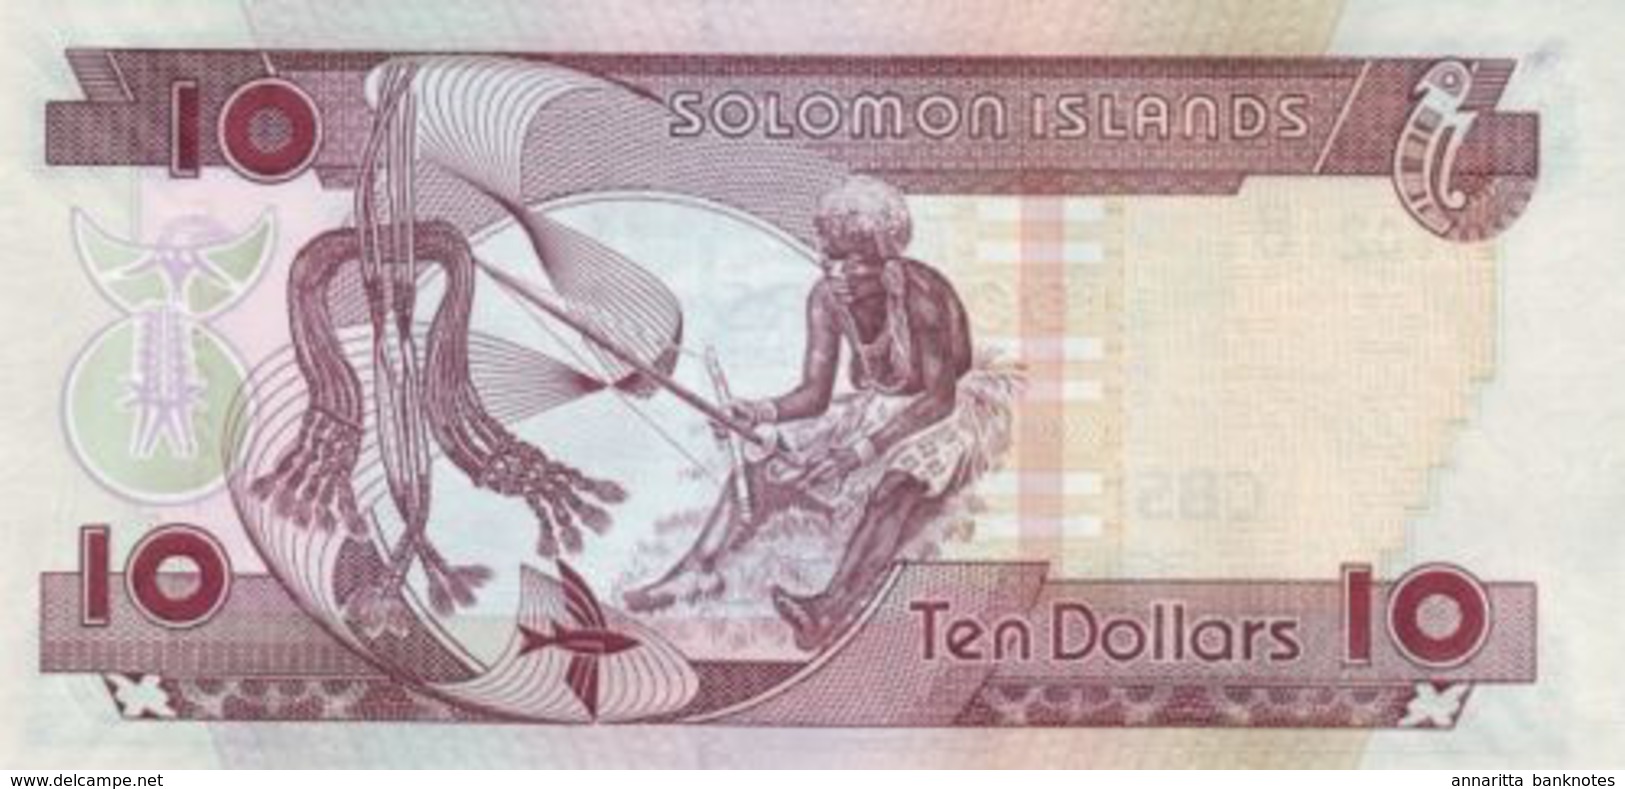 Solomon Islands 10 Dollars ND (2009), UNC, P-27a, SB217a - Solomon Islands